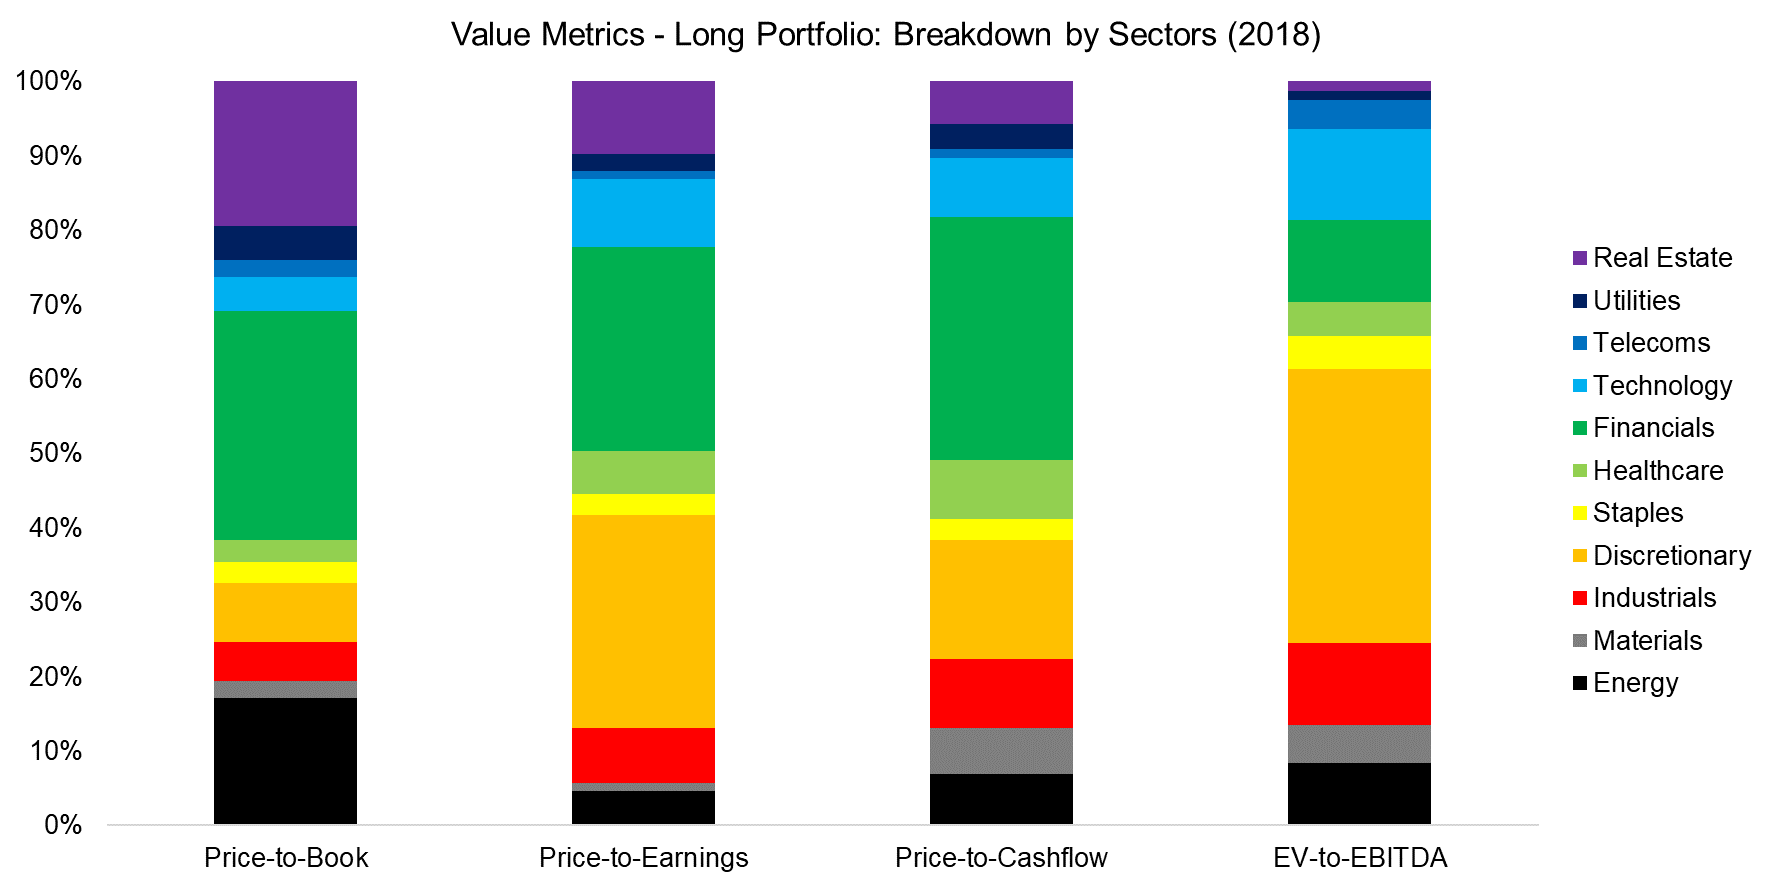 Value Metrics - Long Portfolio Breakdown by Sectors (2018)